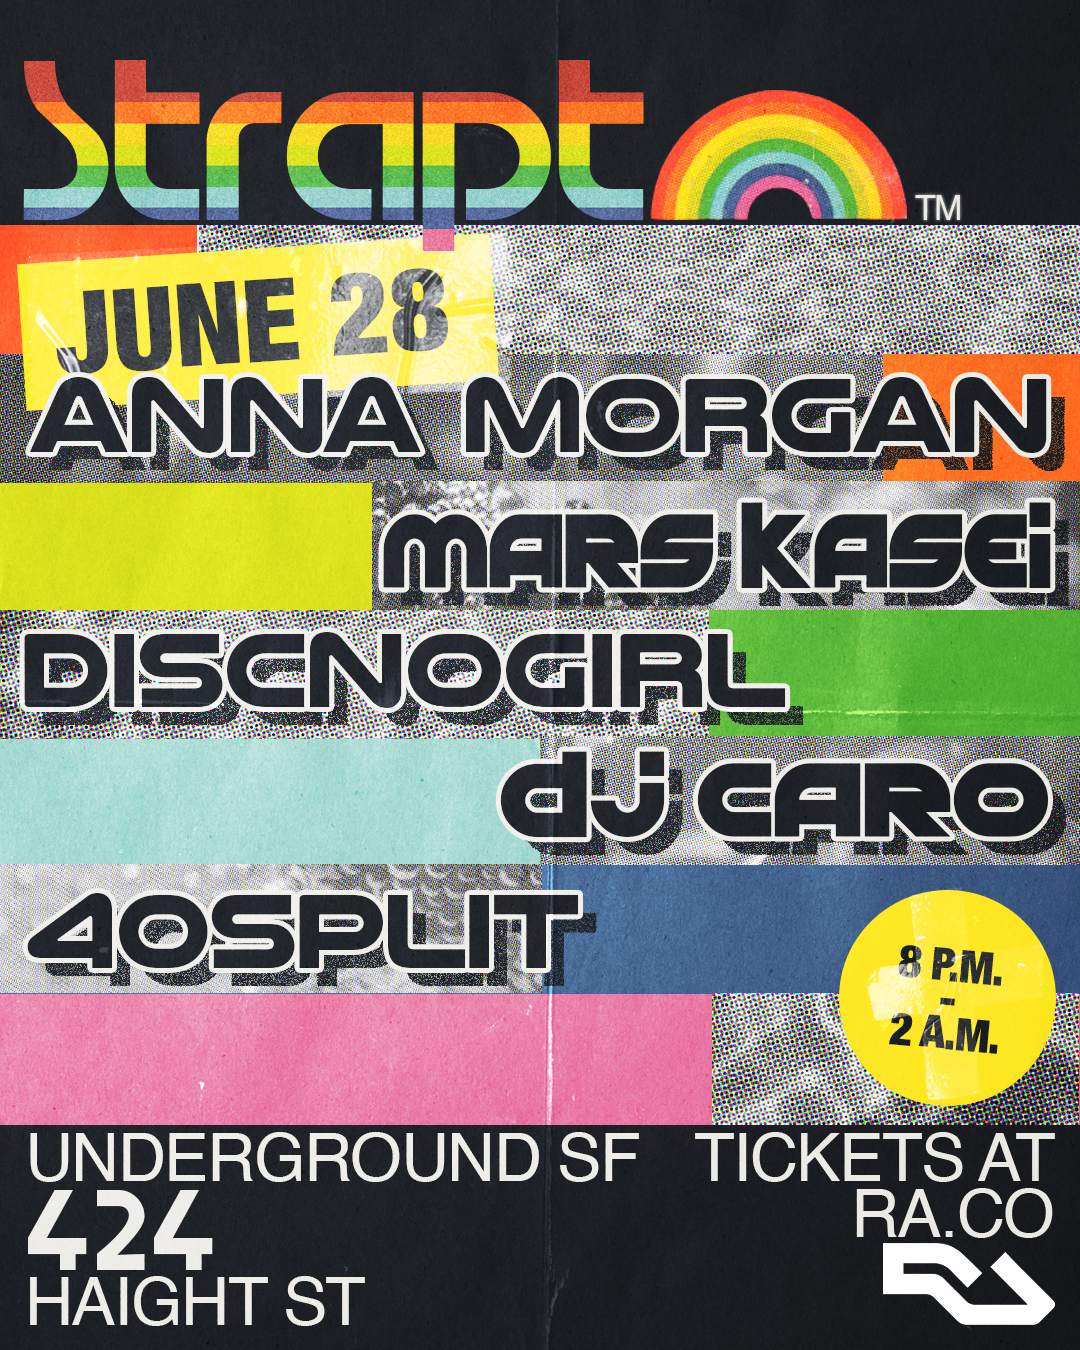 STRAPT presents: PRIDE with Anna Morgan, Mars Kasei, Discnogirl, DJ CARO, 40split - フライヤー表